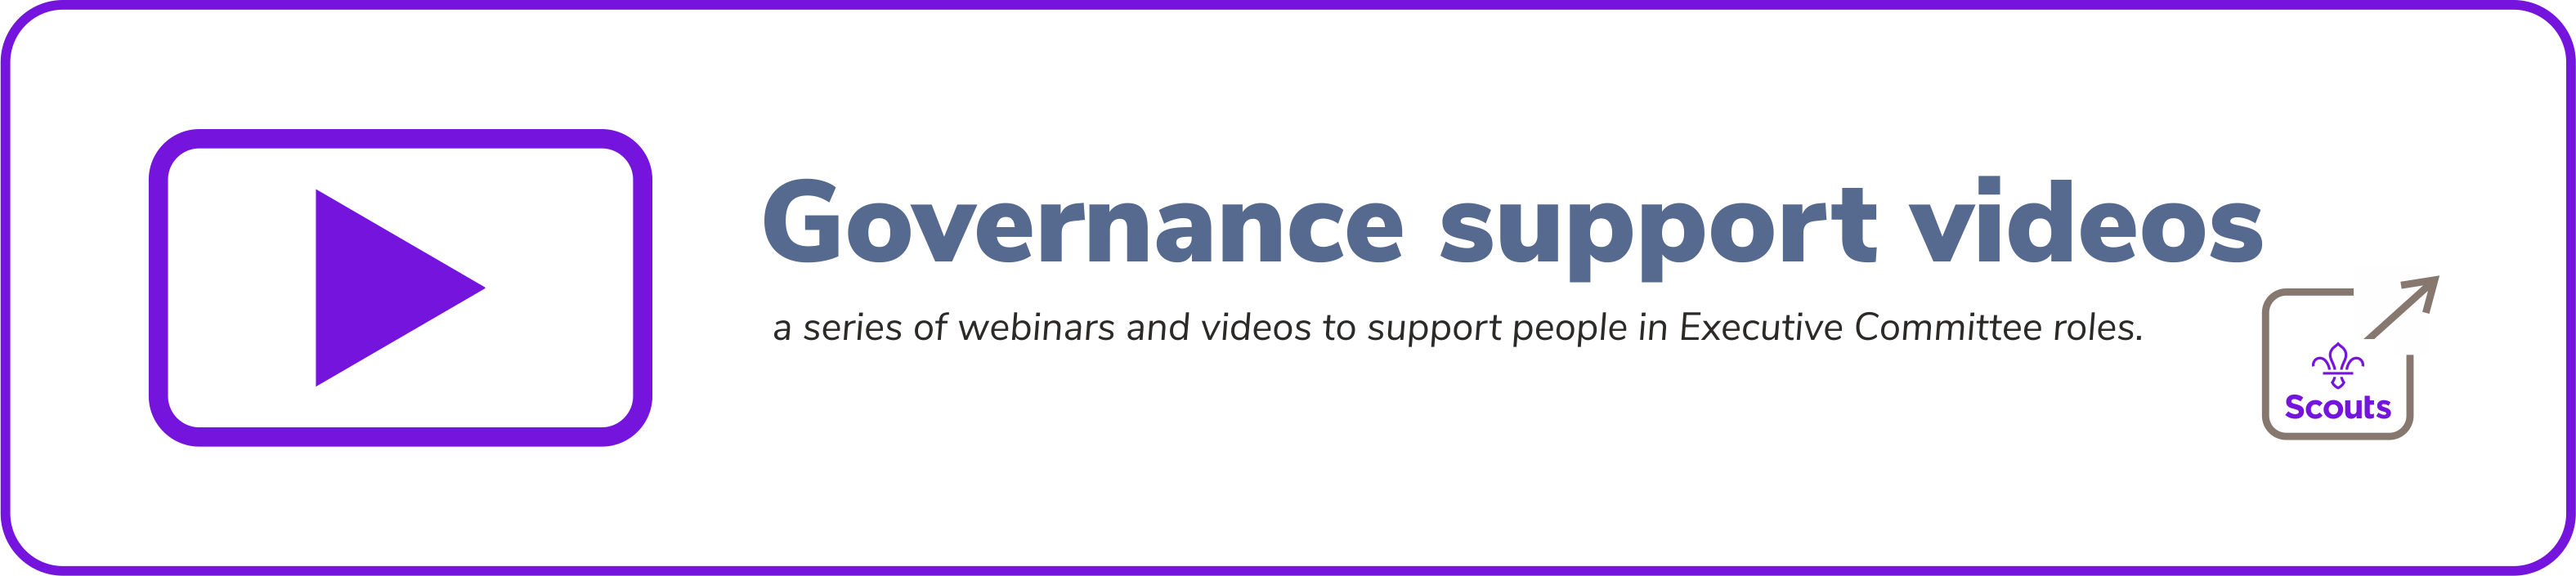 Governance support videos